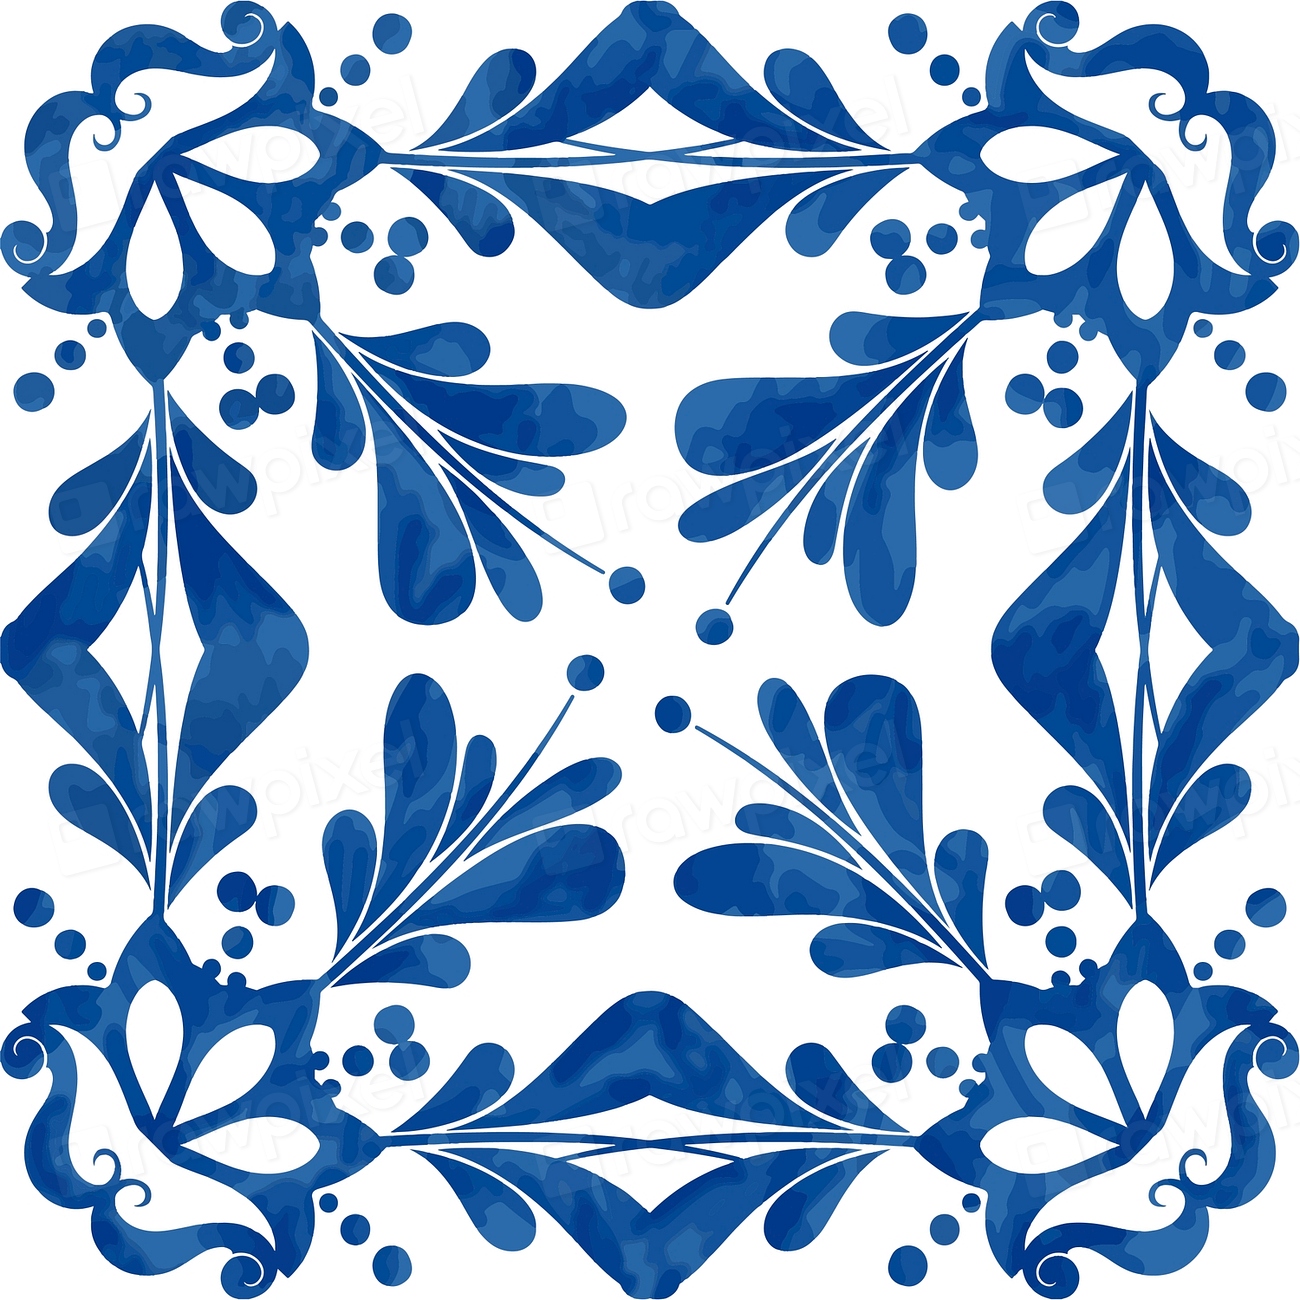 Illustration of tiles textured pattern | Premium Vector - rawpixel